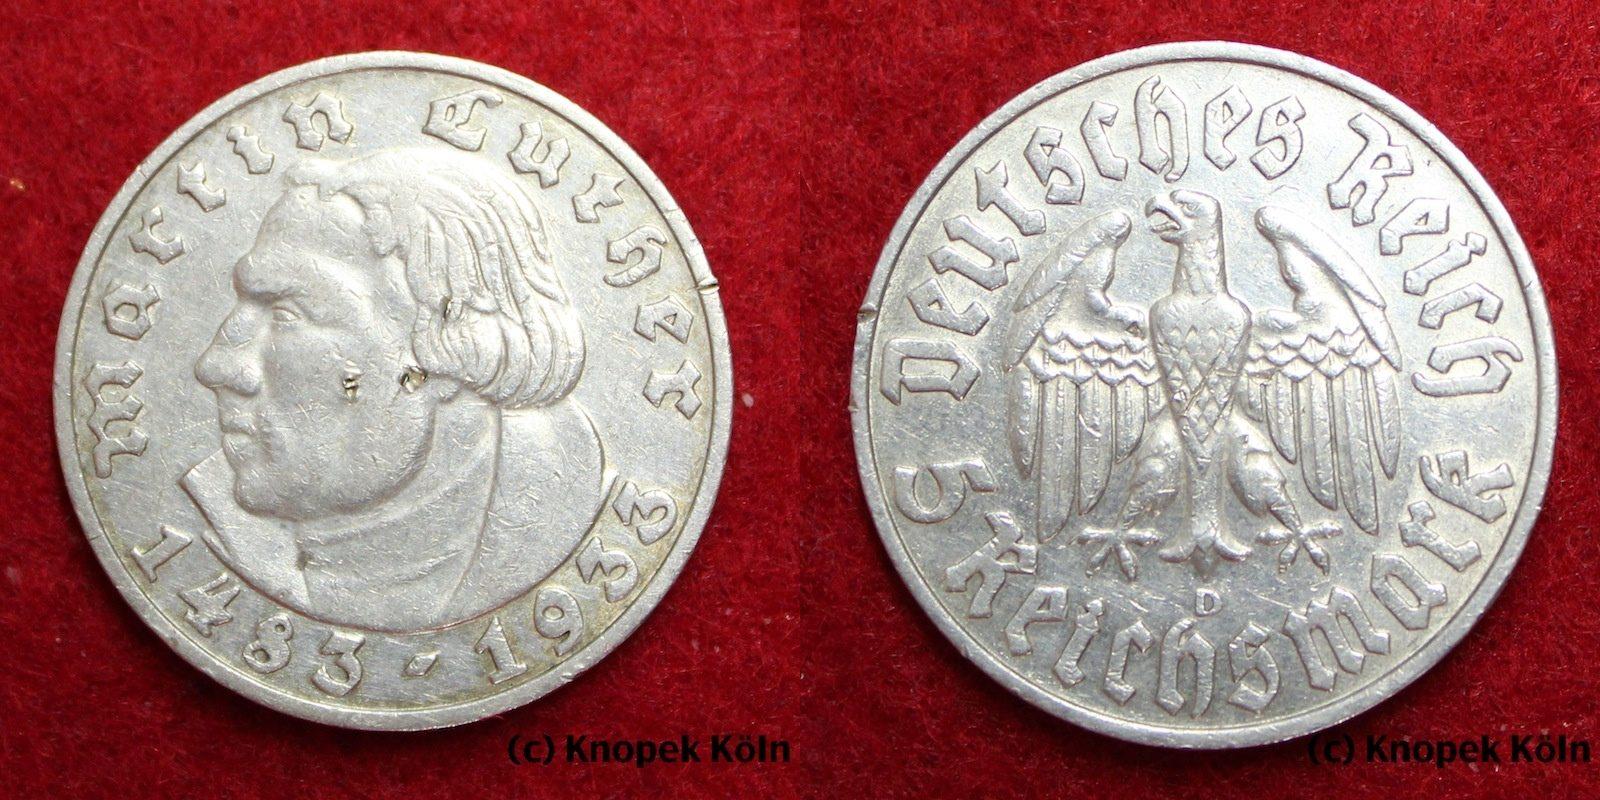 Foto Drittes Reich 5 Reichsmark Rm 1933 D foto 487312